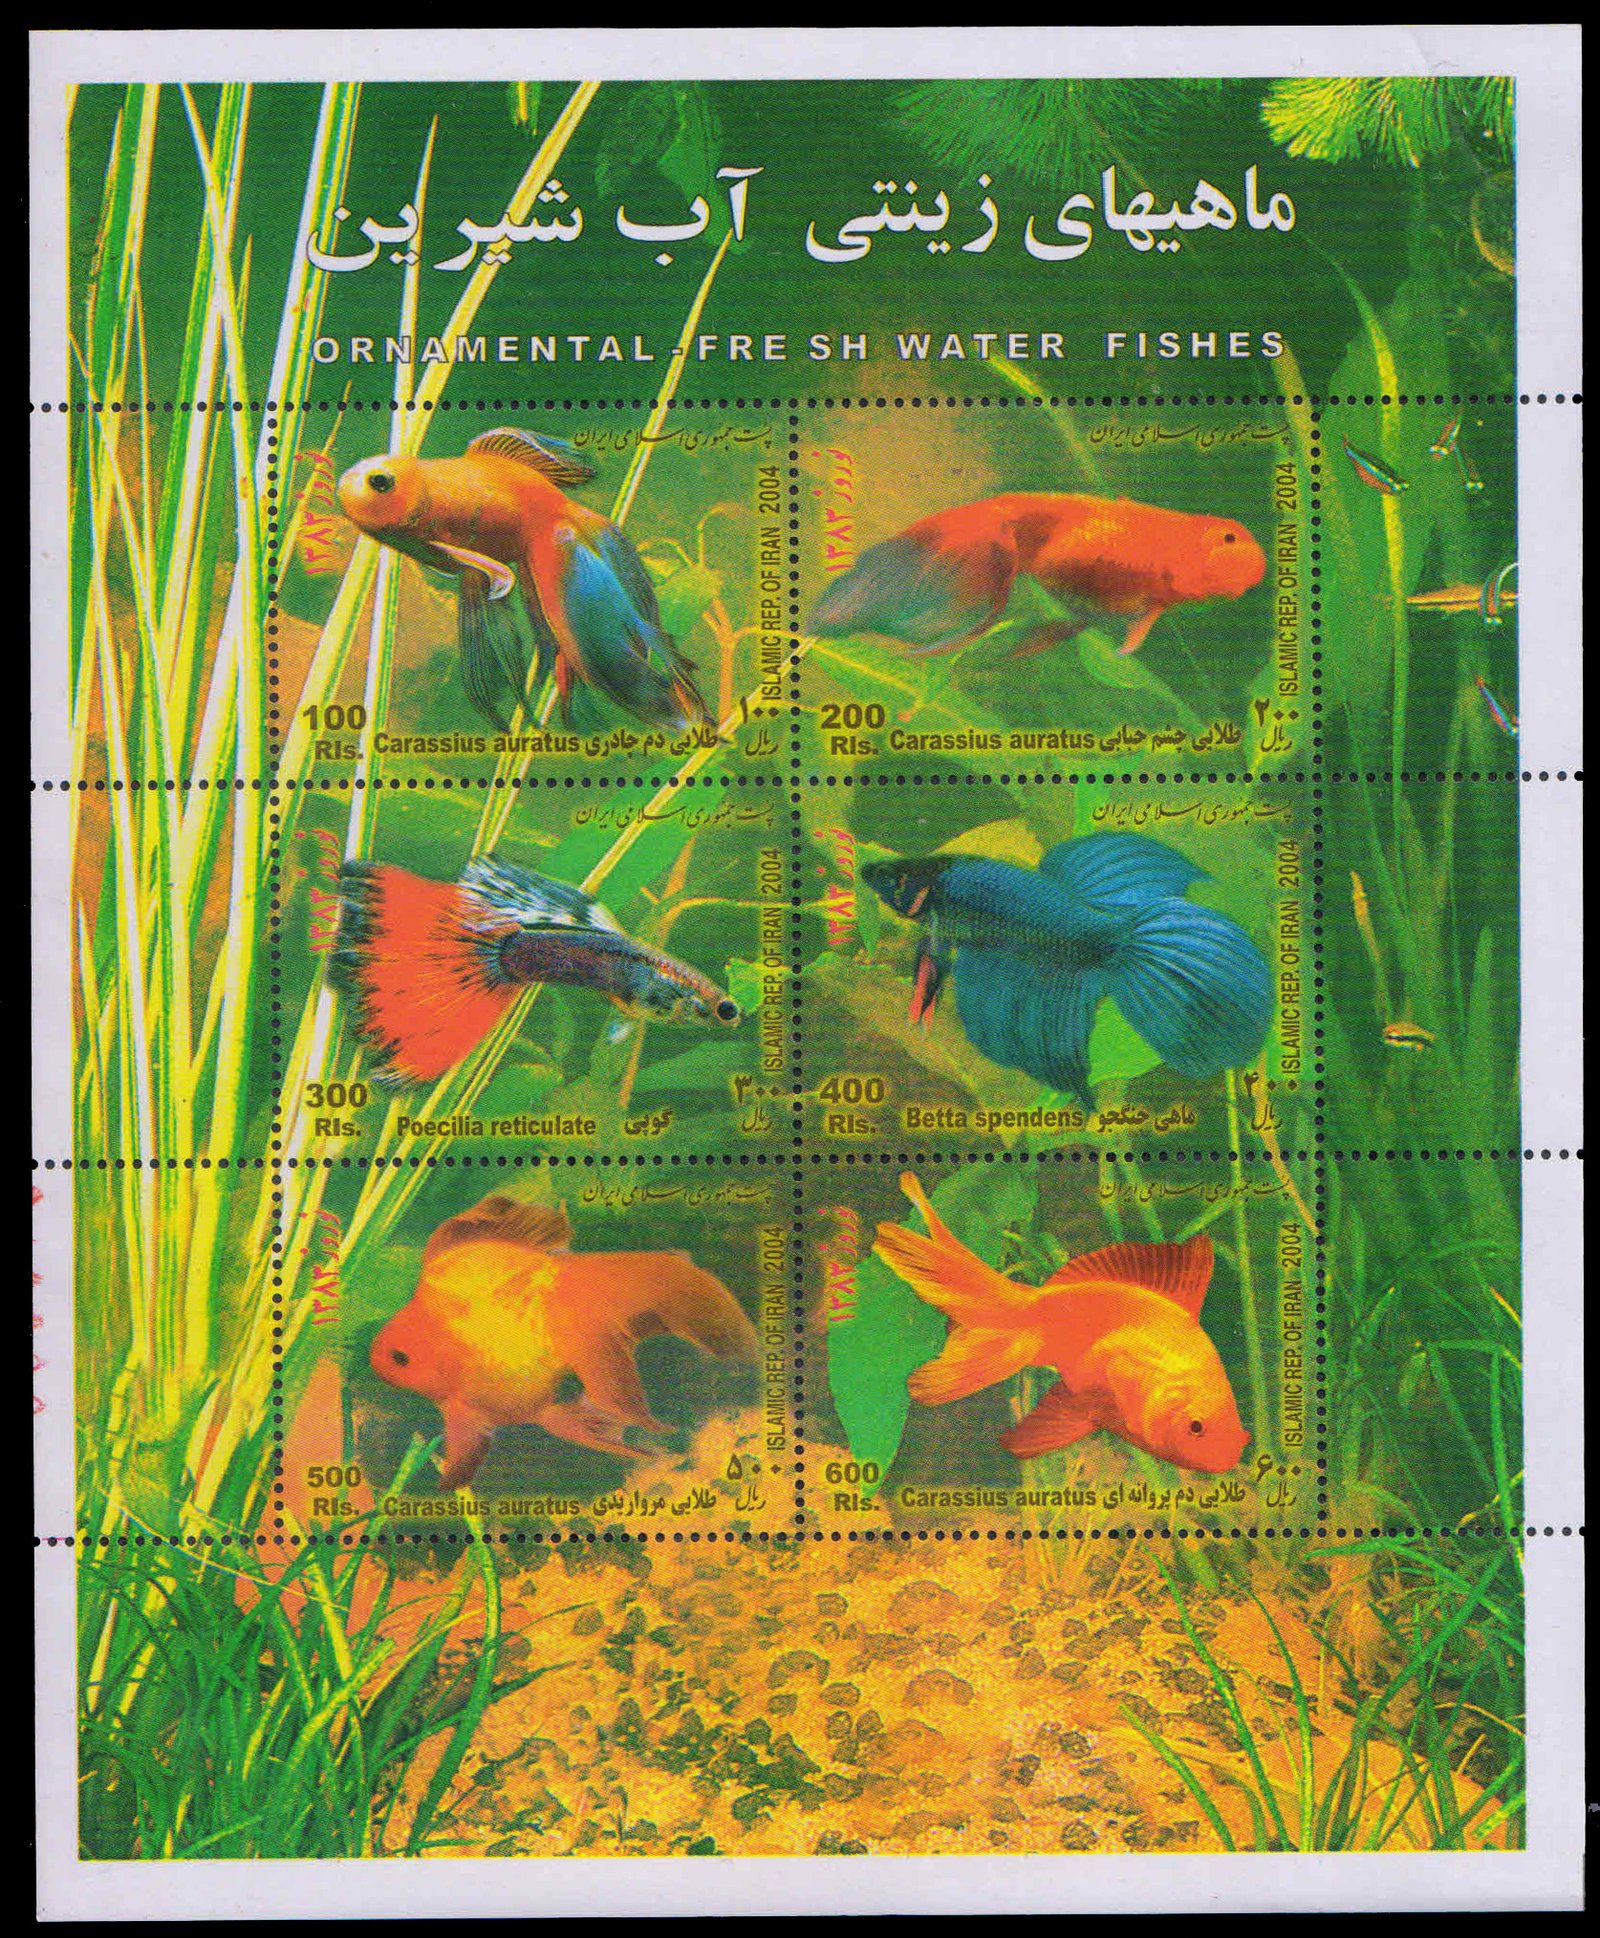 IRAN 2004-New Year-Ornamental Fish-Siamese Fighting Fish, Miniature Sheet of 6 stamps-S.G. 3145-3150-MNH